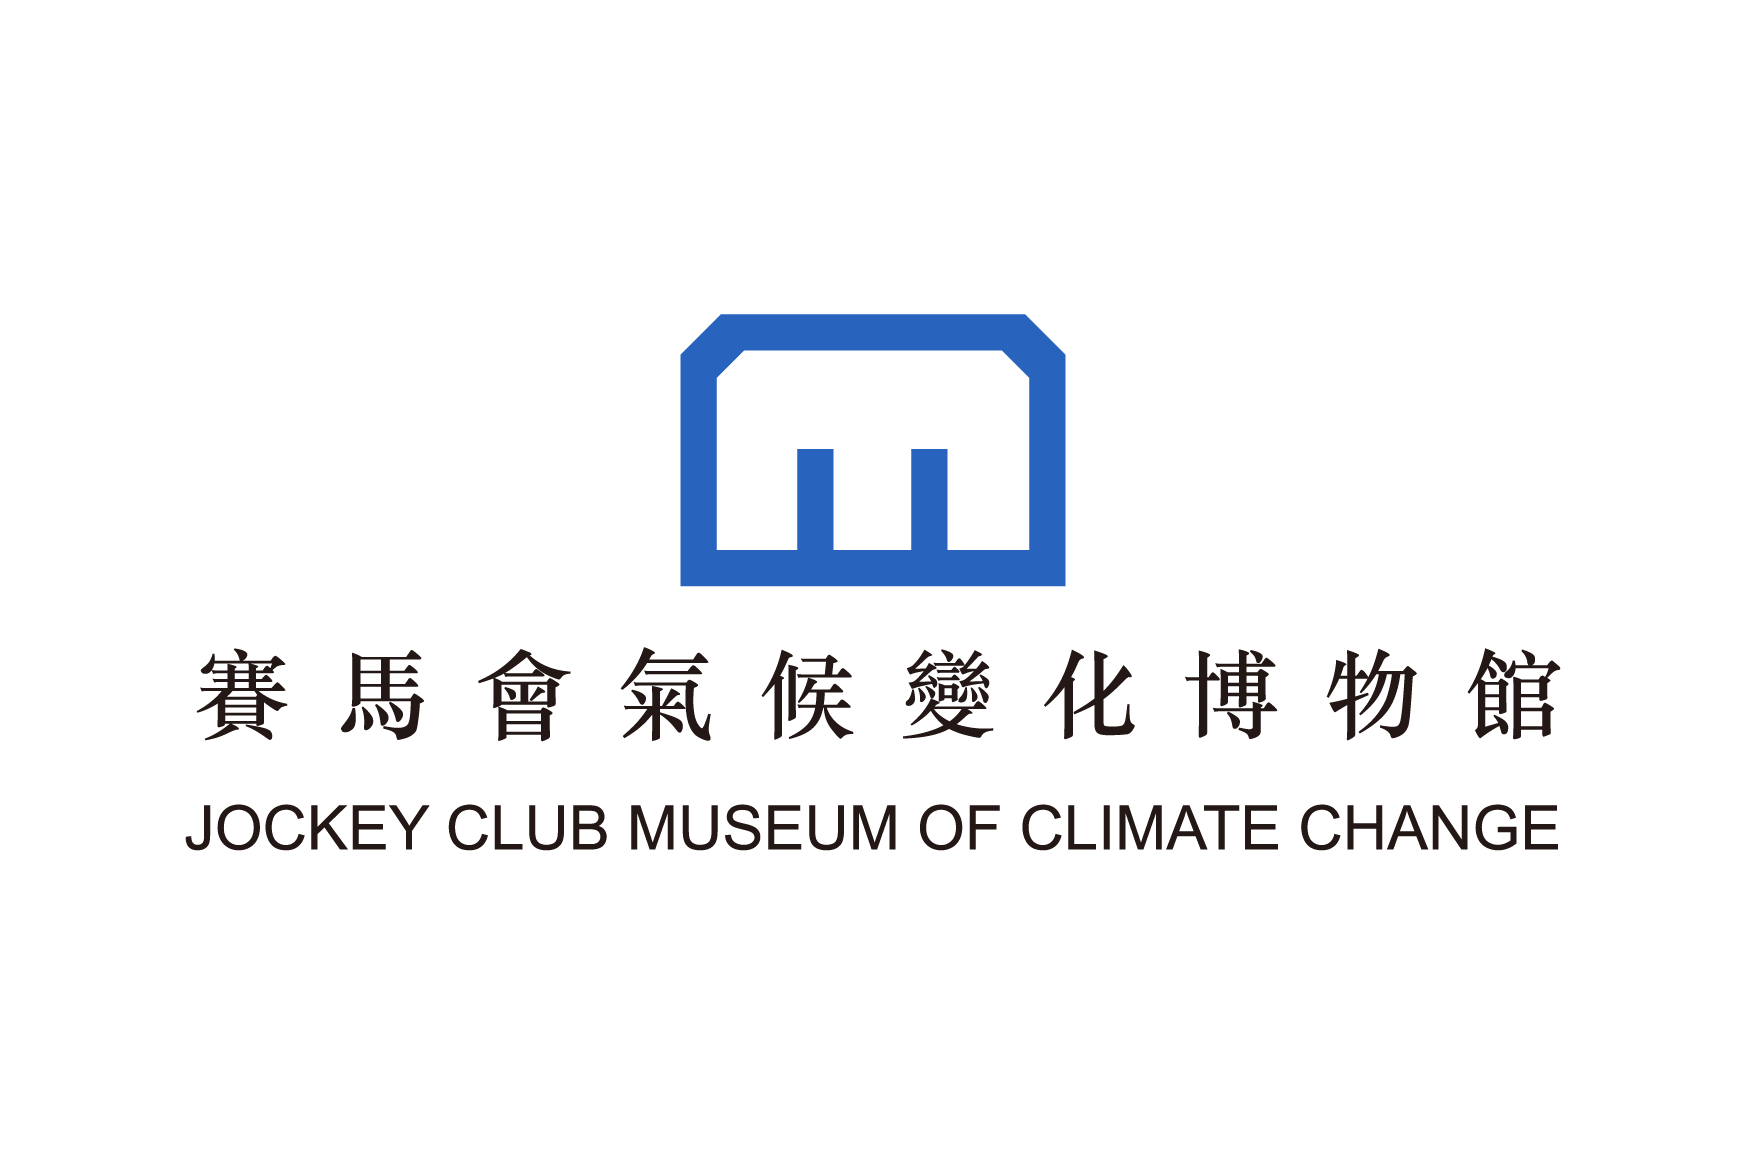 Jockey Club Museum of Climate Change